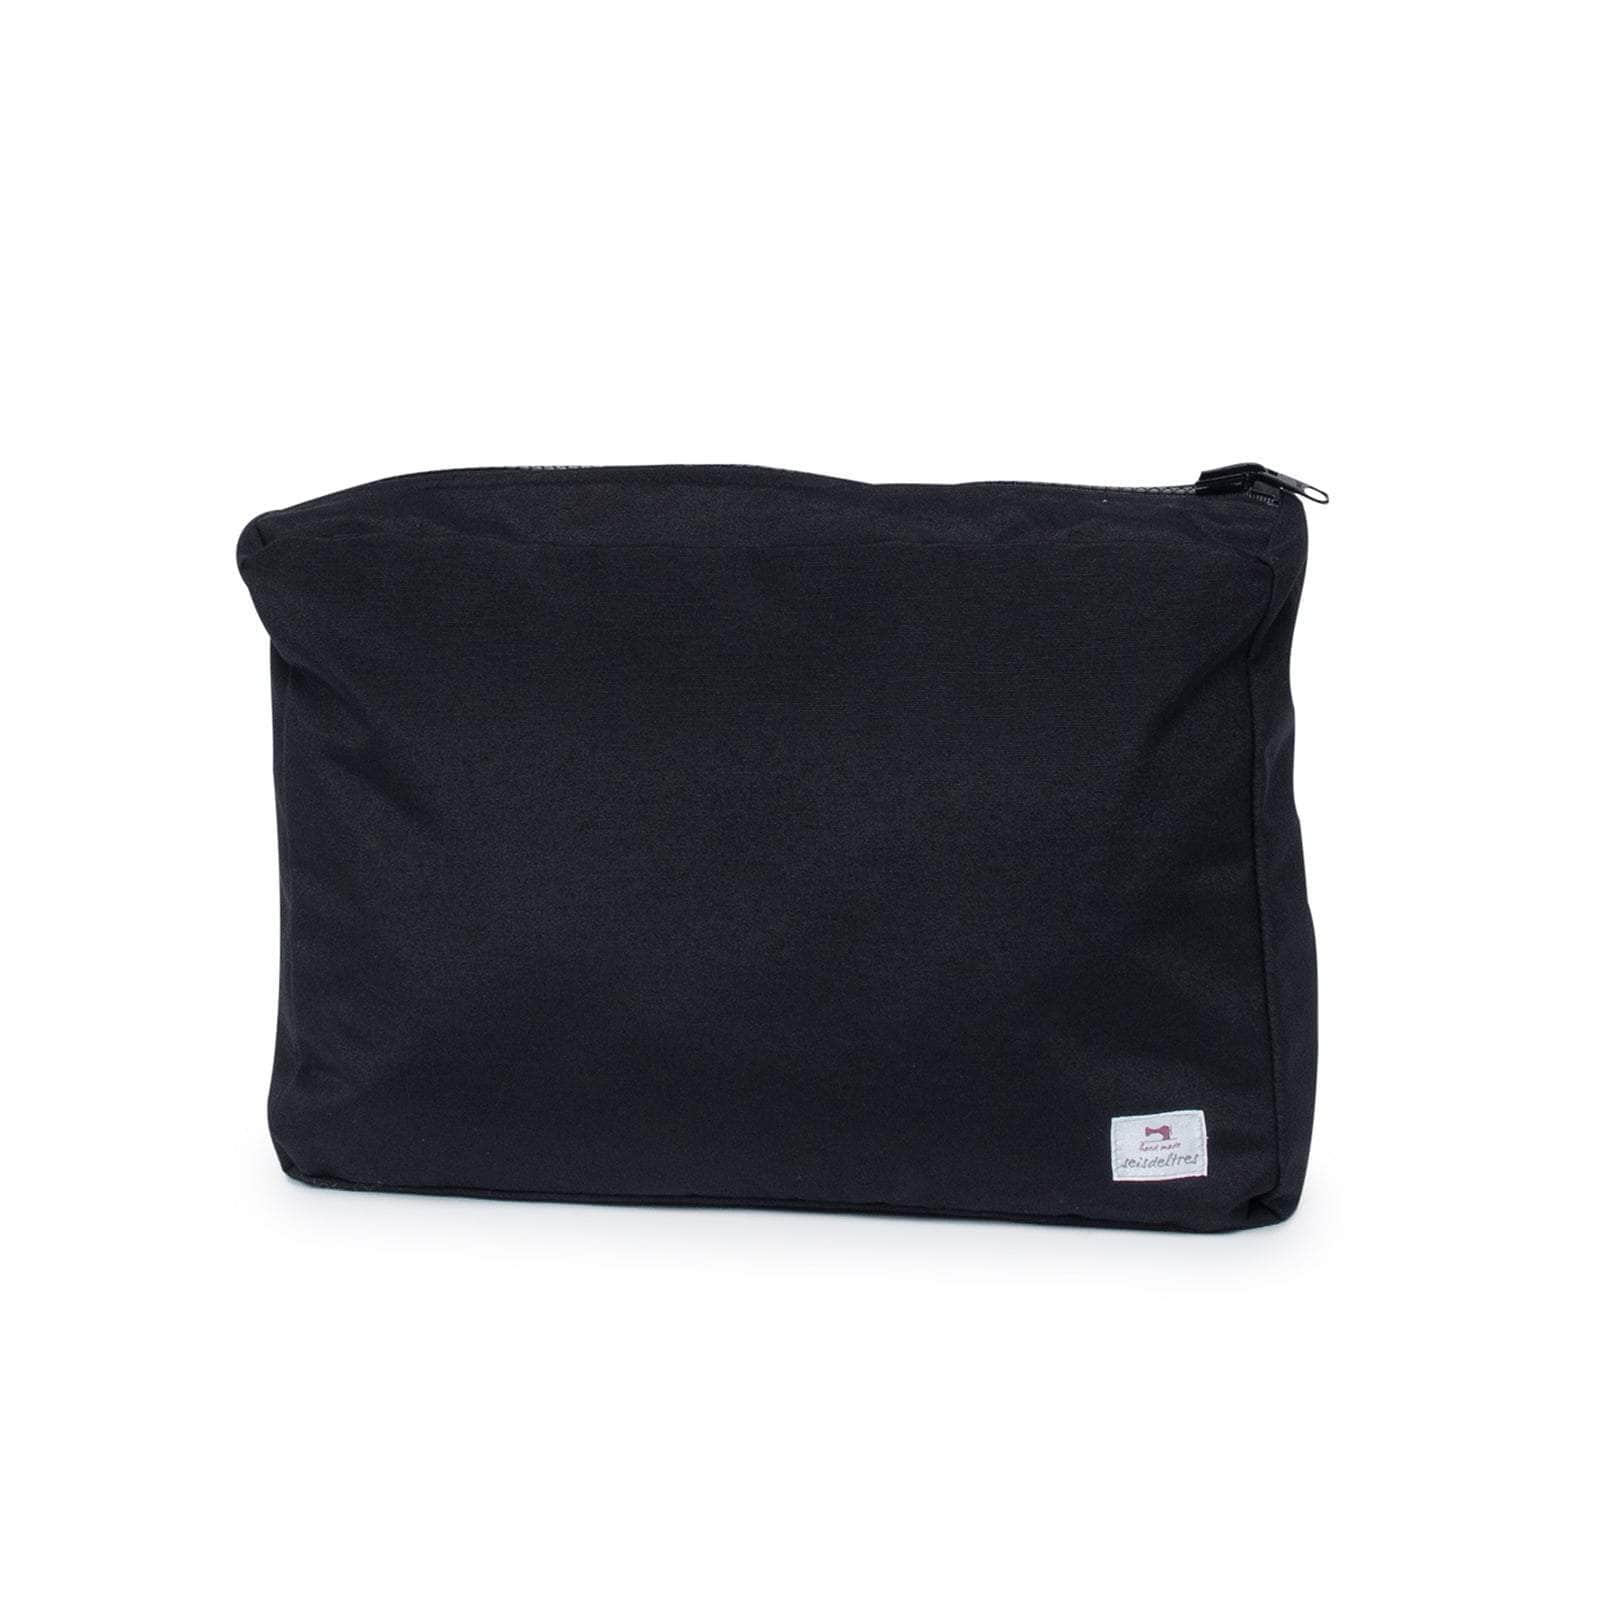 pack mybigbag Pack completo - bolsa L, bolsa XL y neceser - Raya Ancha Negro/Piedra